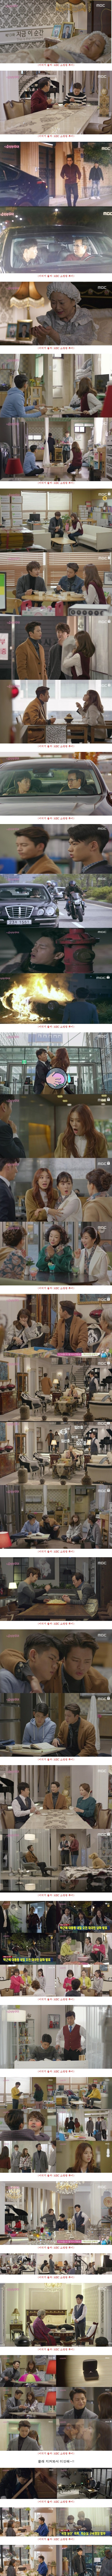 episode 13 captures for the Korean drama 'Shopping King Louis'